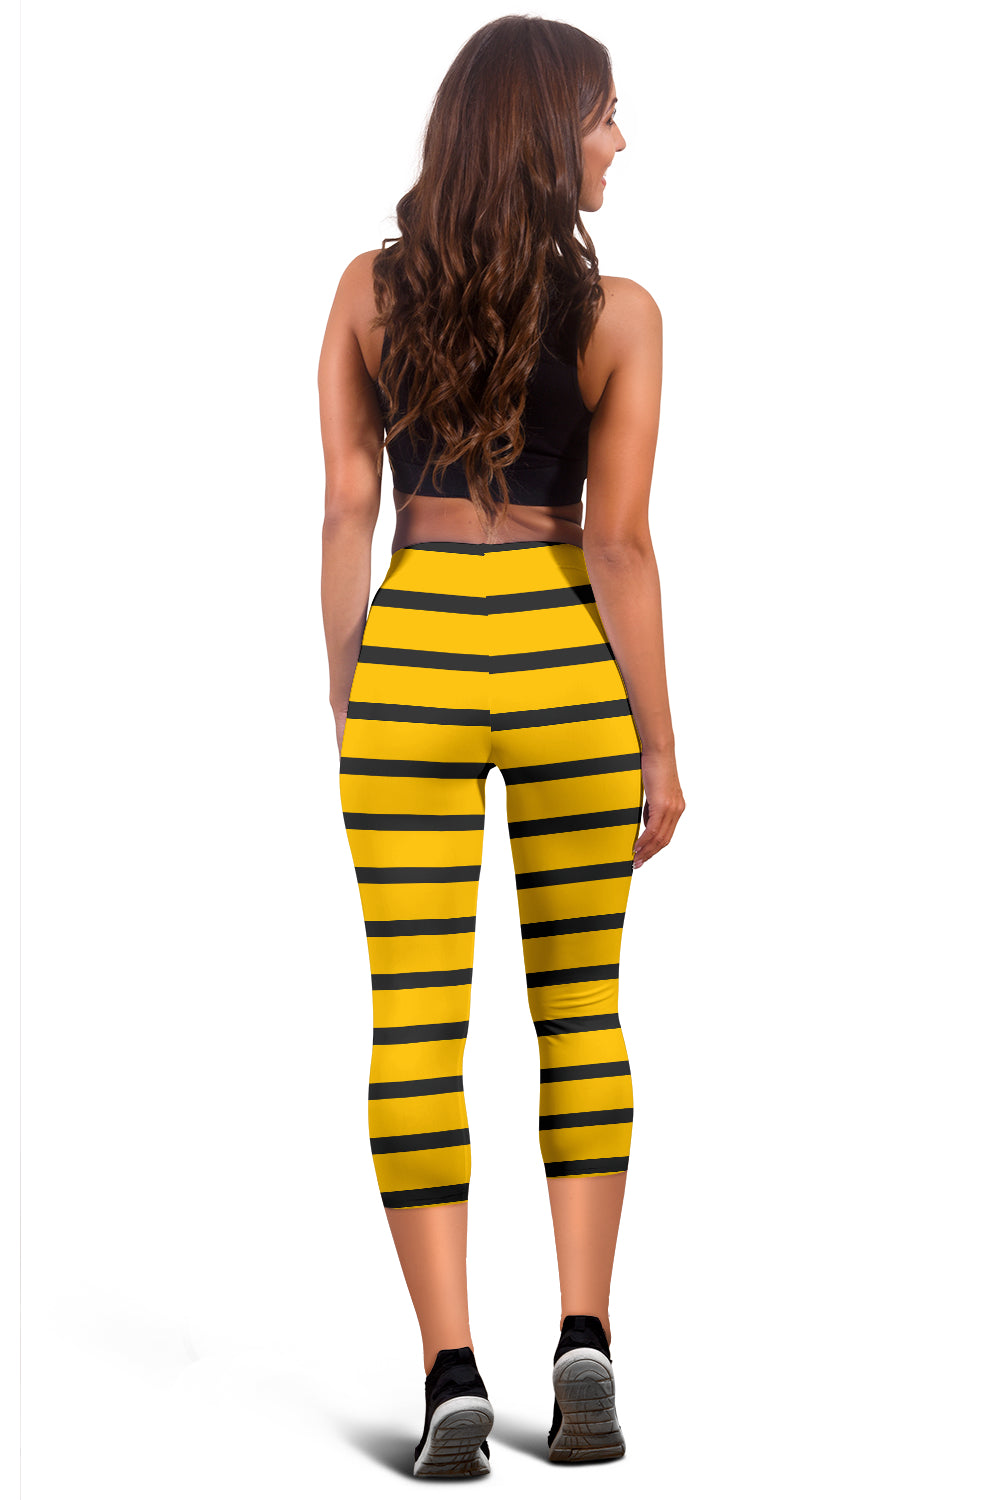 Minimal Yellow Bee Women's Capris Leggings - Towlivesmatter